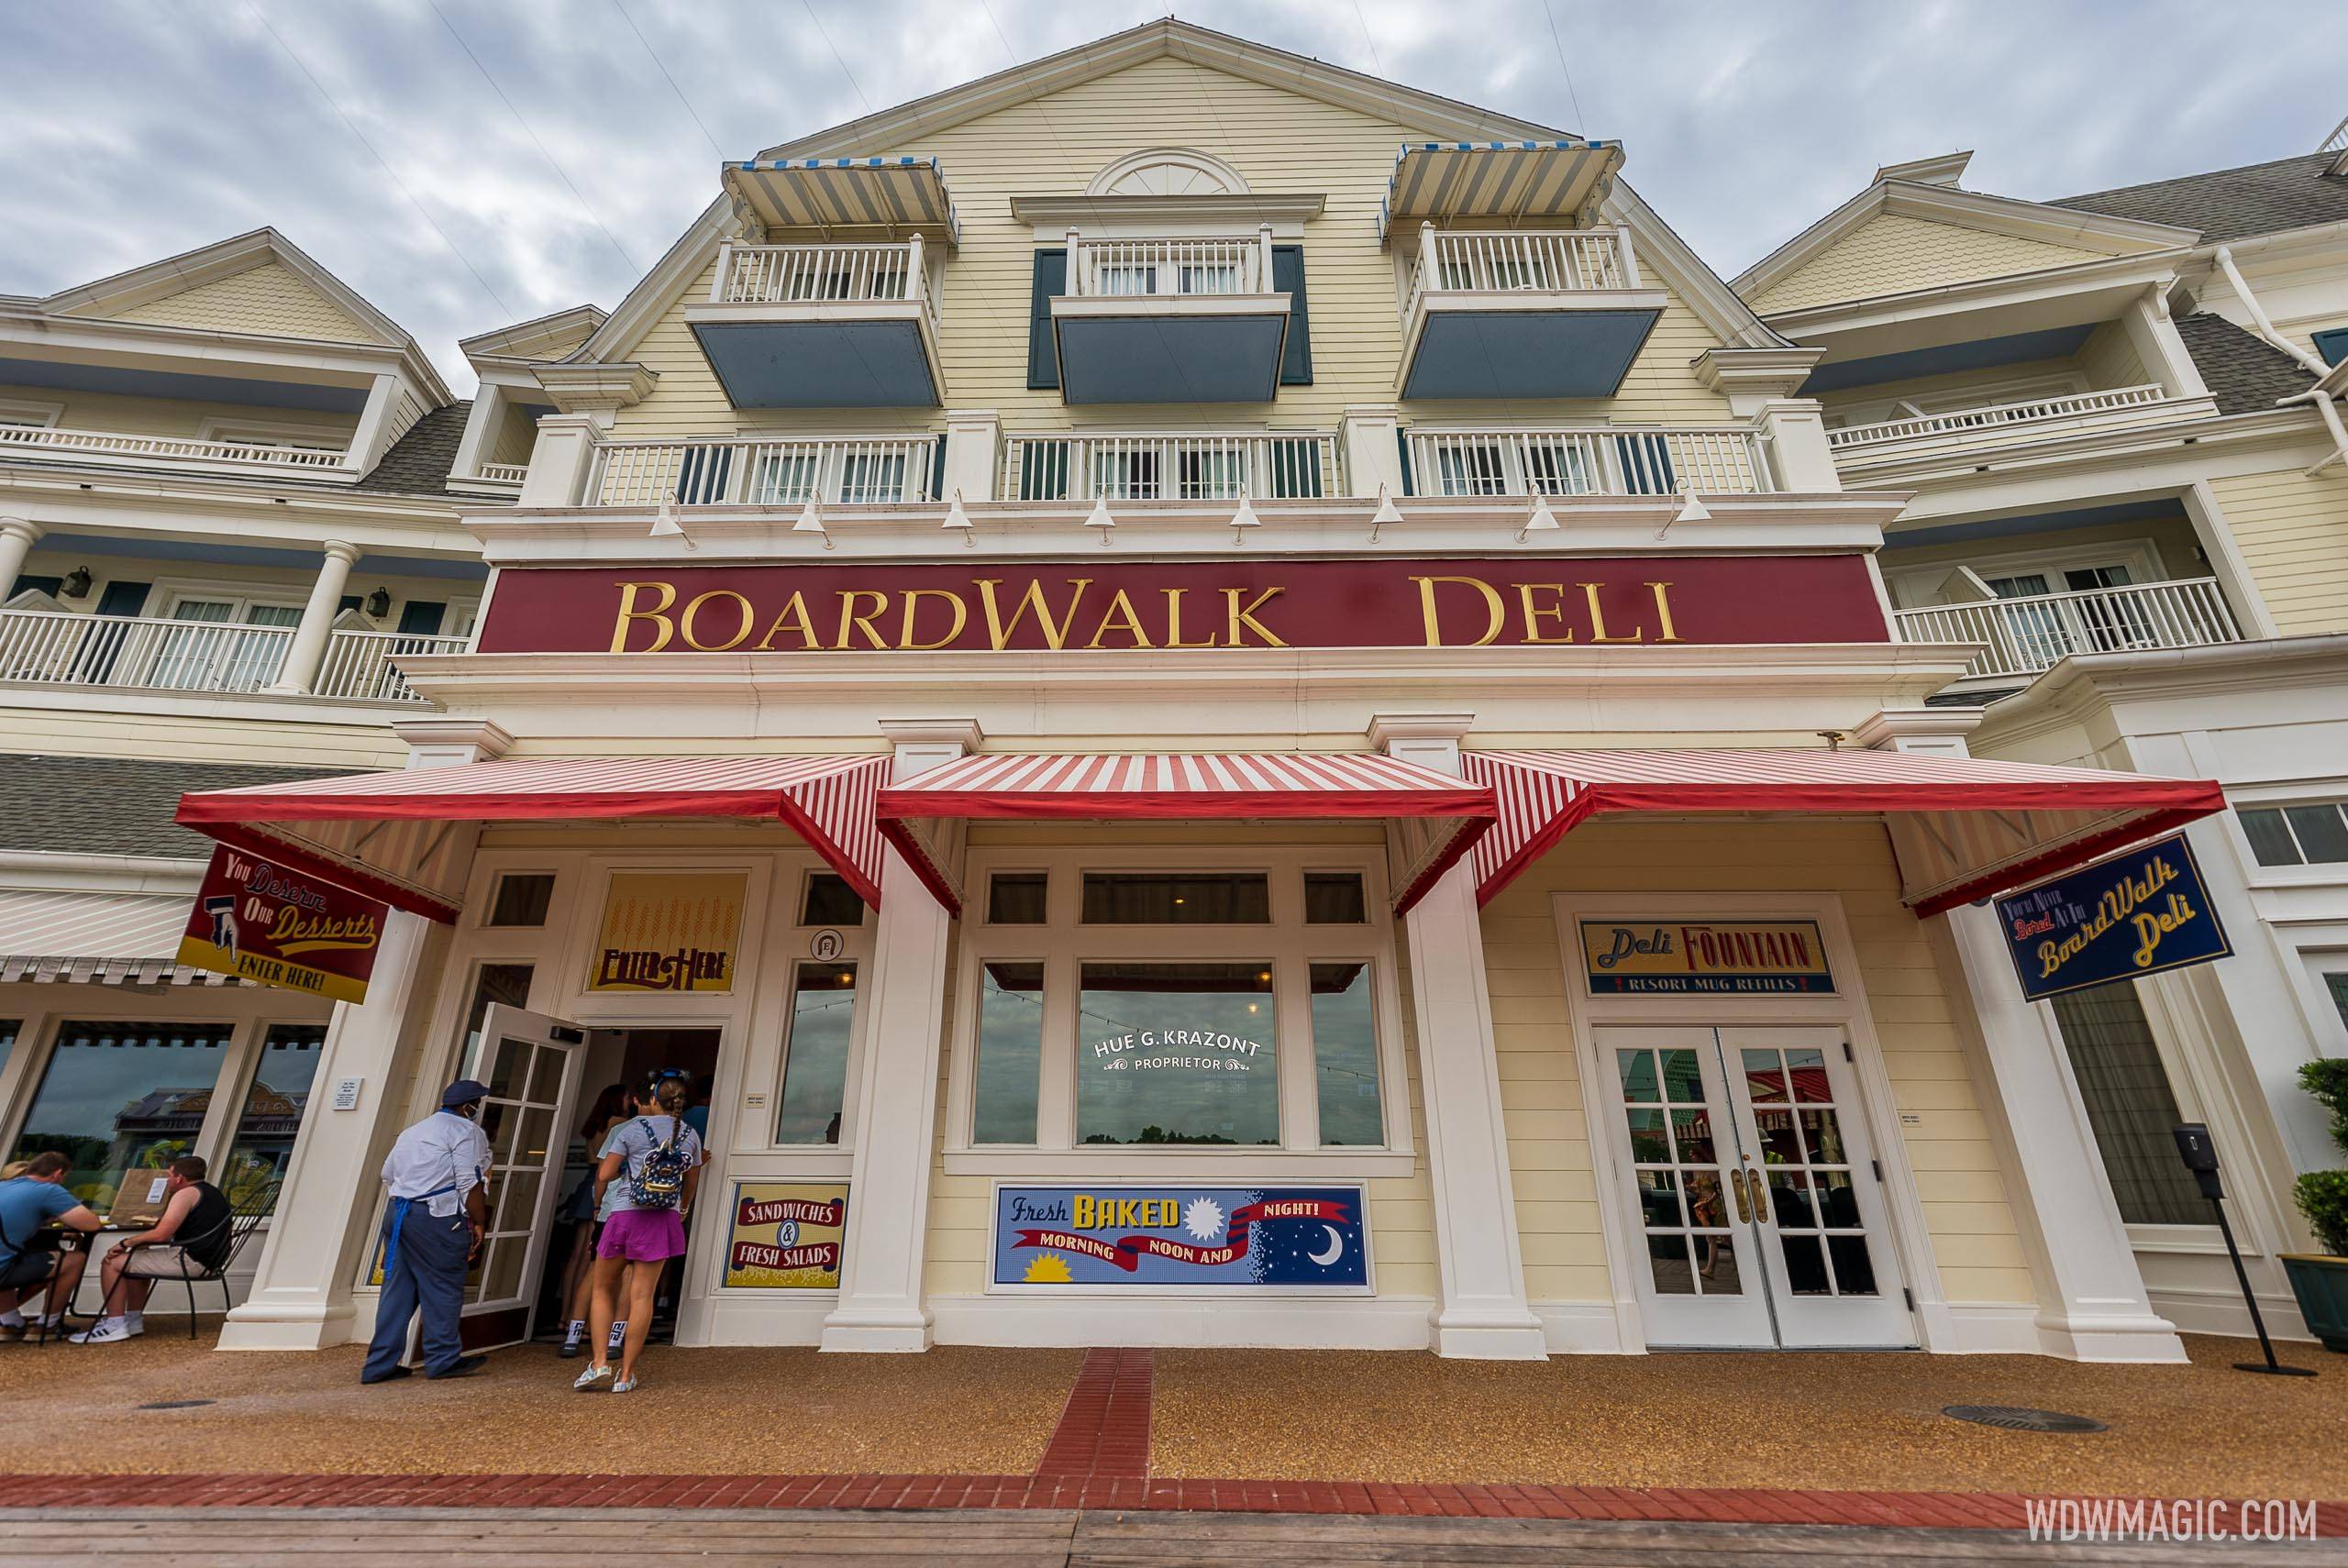 BoardWalk Deli opens with new breakfast, lunch, and dinner options on Disney's BoardWalk